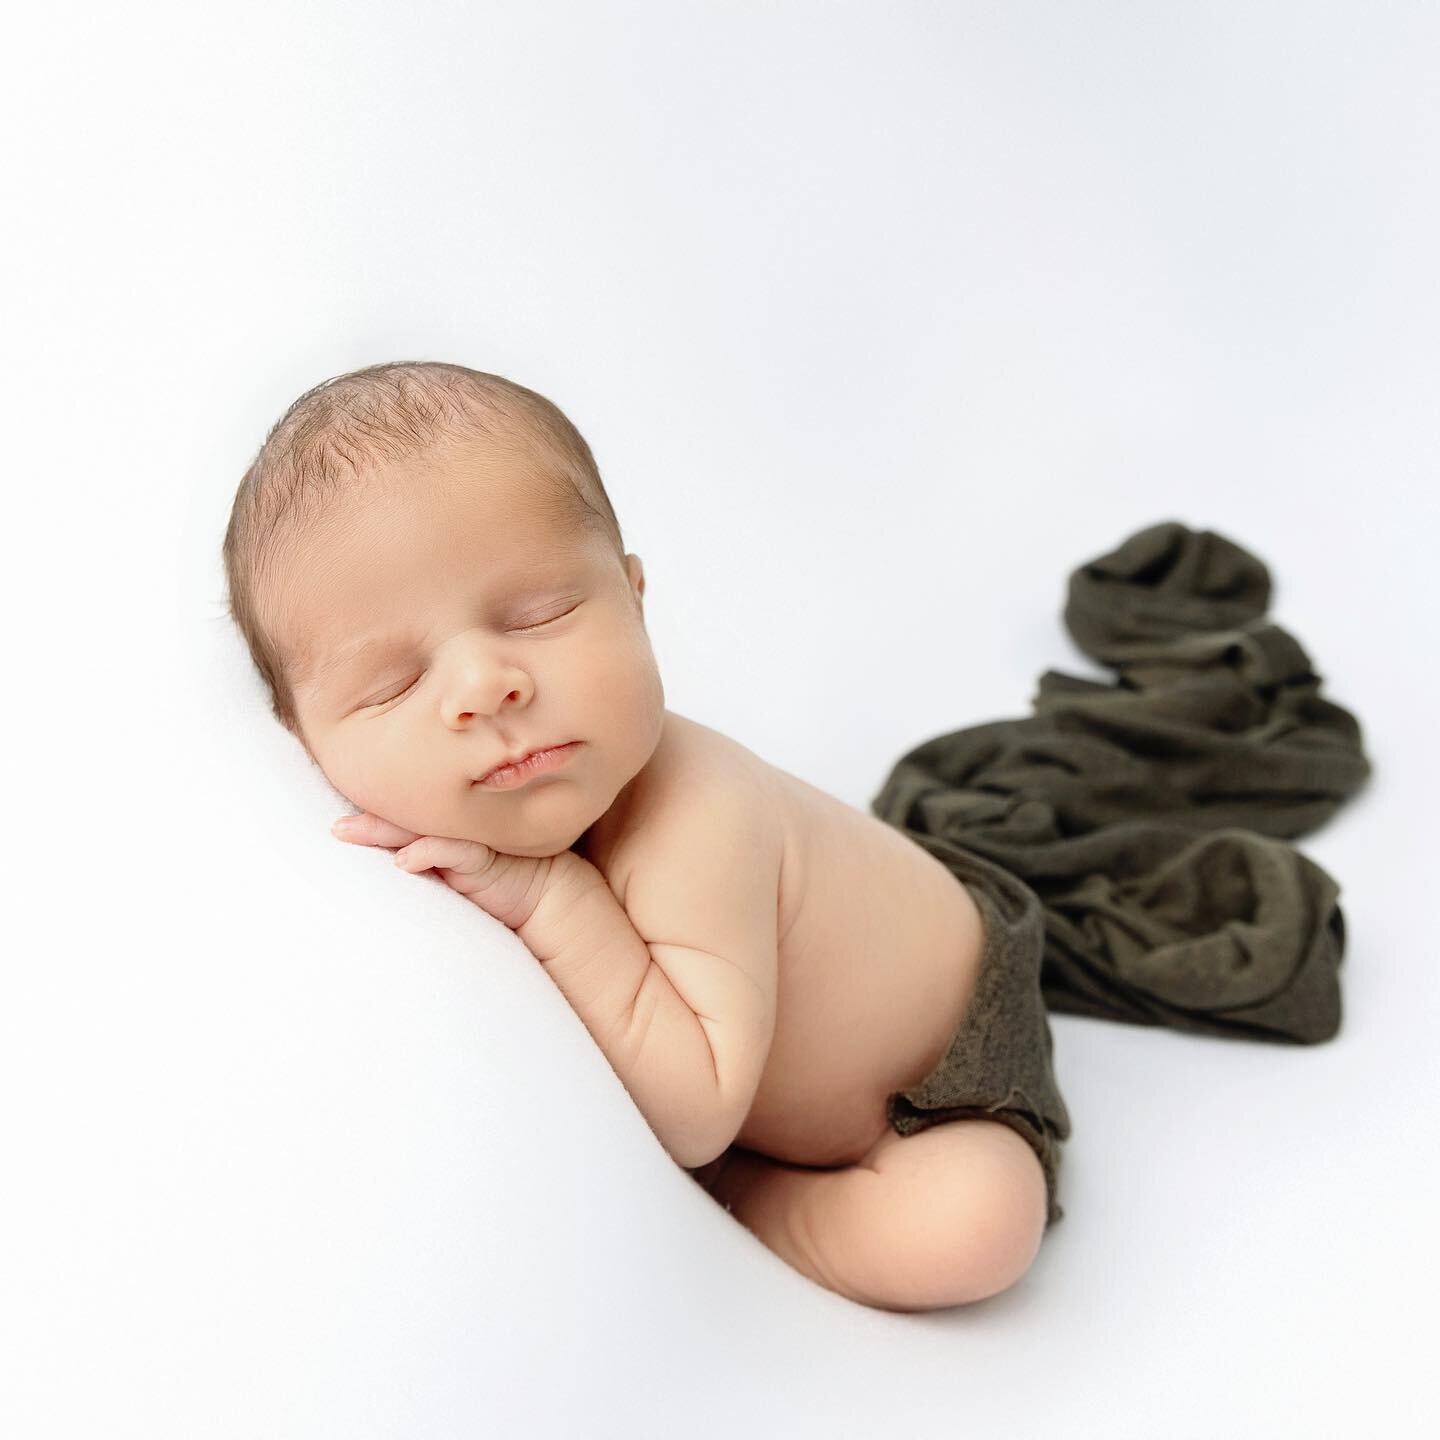 What a beautiful day 🤍 you are here! 🤍 

Newborn Photosession 
Fairfax, Virginia 
www.LinaPics.com 

#fairfaxva #fairfaxvastudio #mosbytower #photographerinfairfaxva #newbornboy #newborn #babyboy #greenday #militargreen #inspo